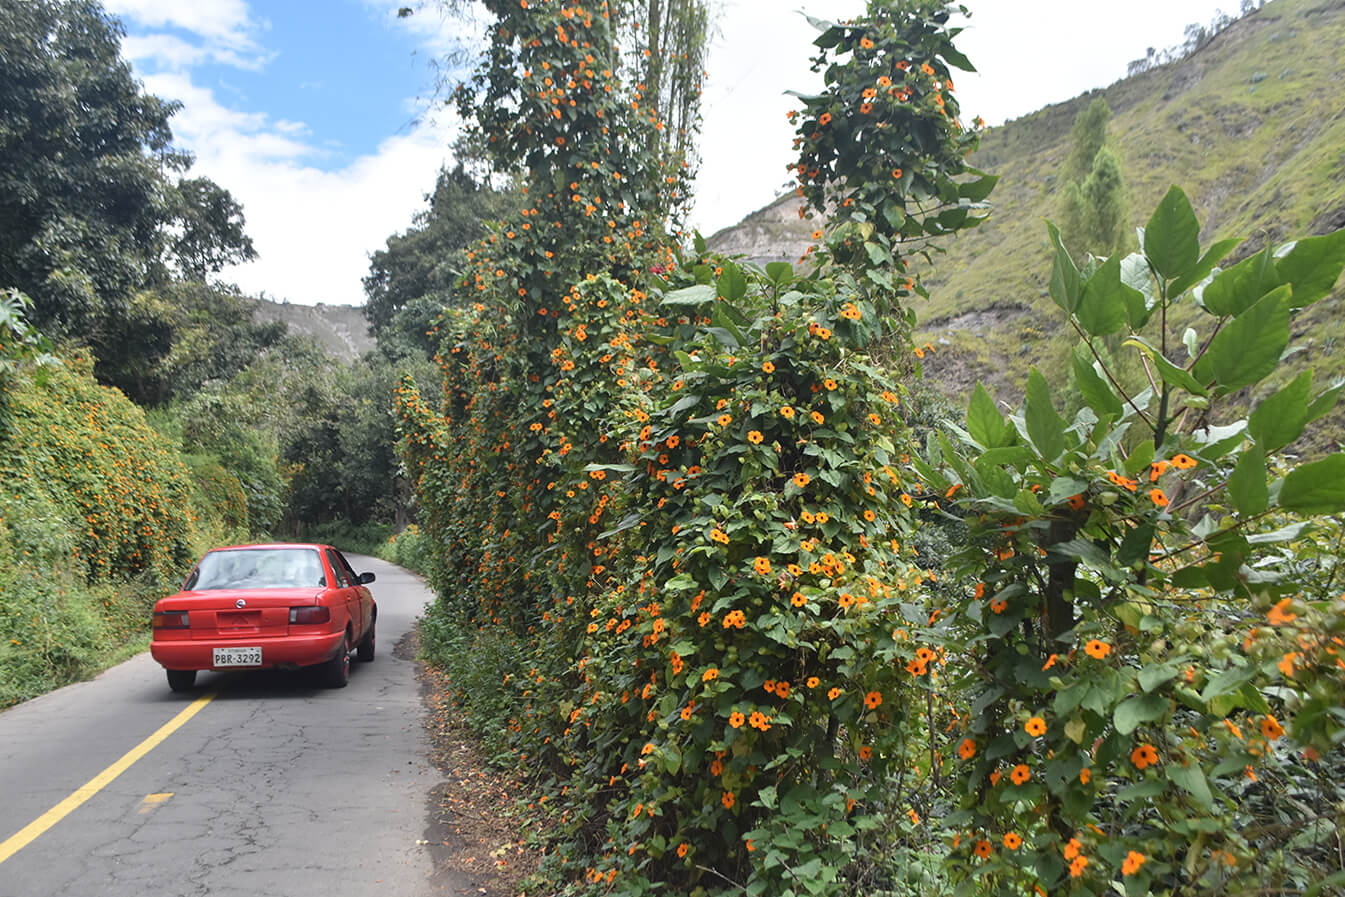 El color naranja intenso de esta planta resalta sobre los arbustos verdes.